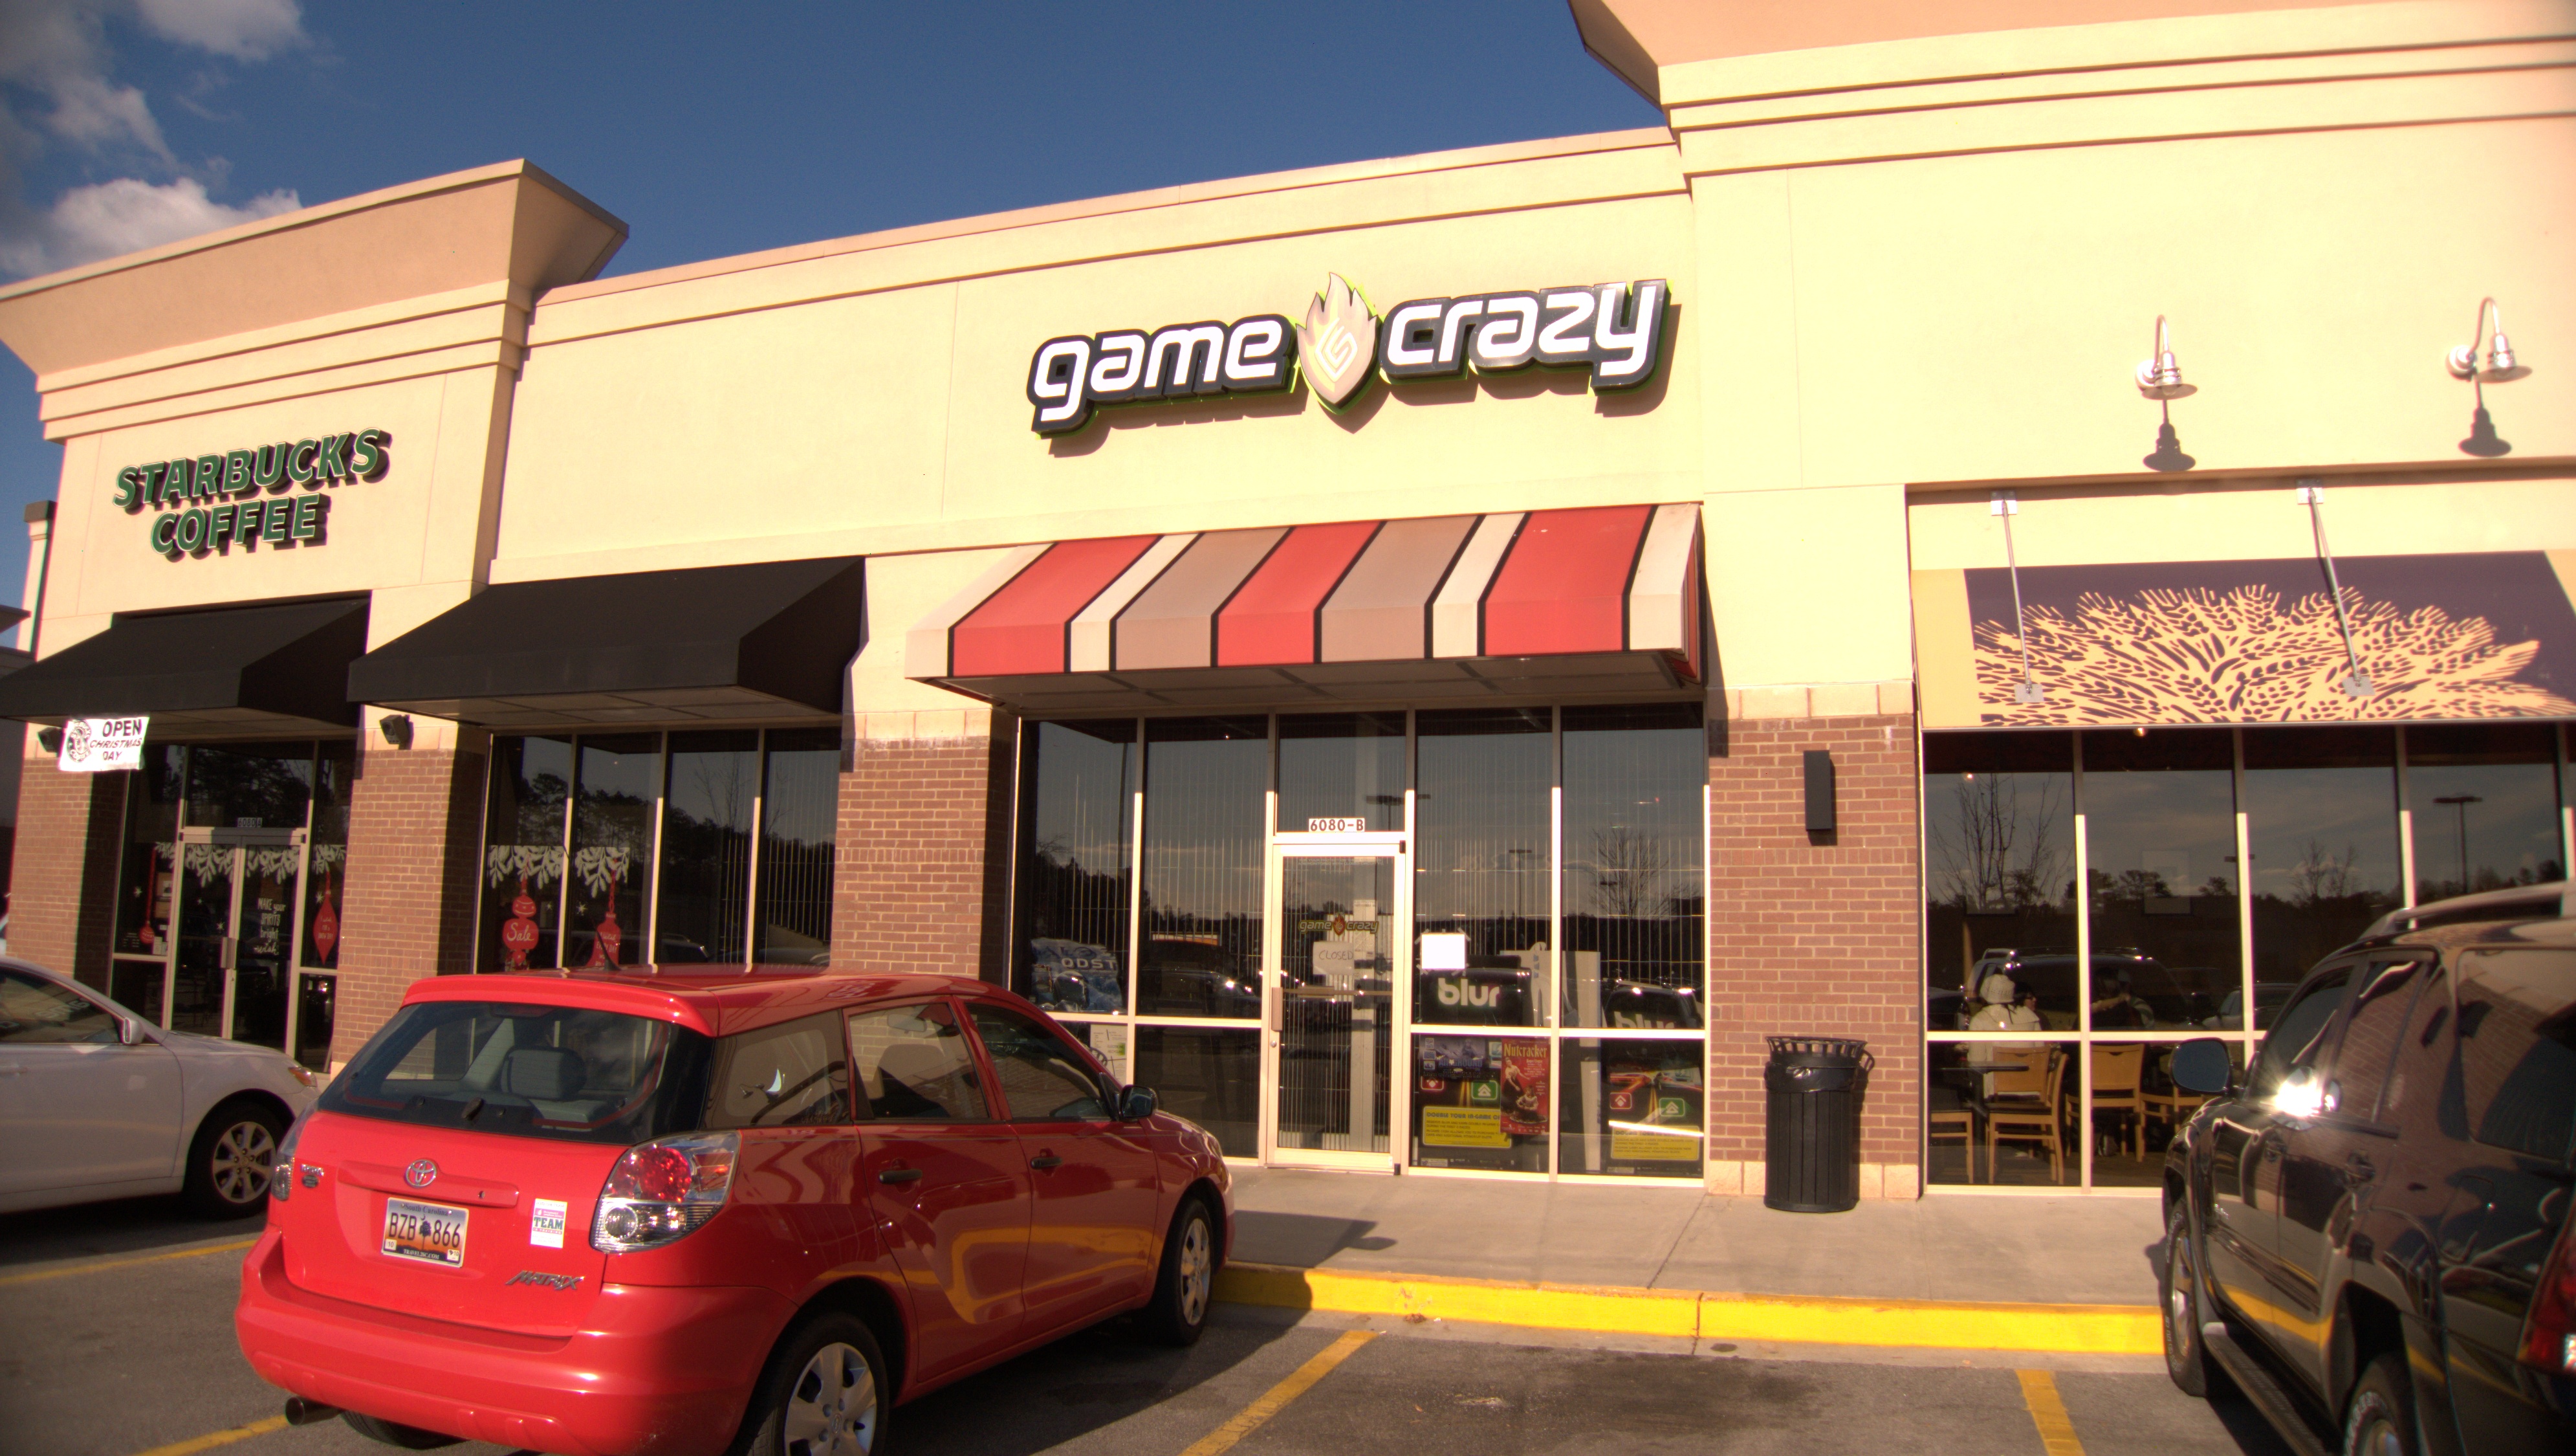 Crazy Games   Stores